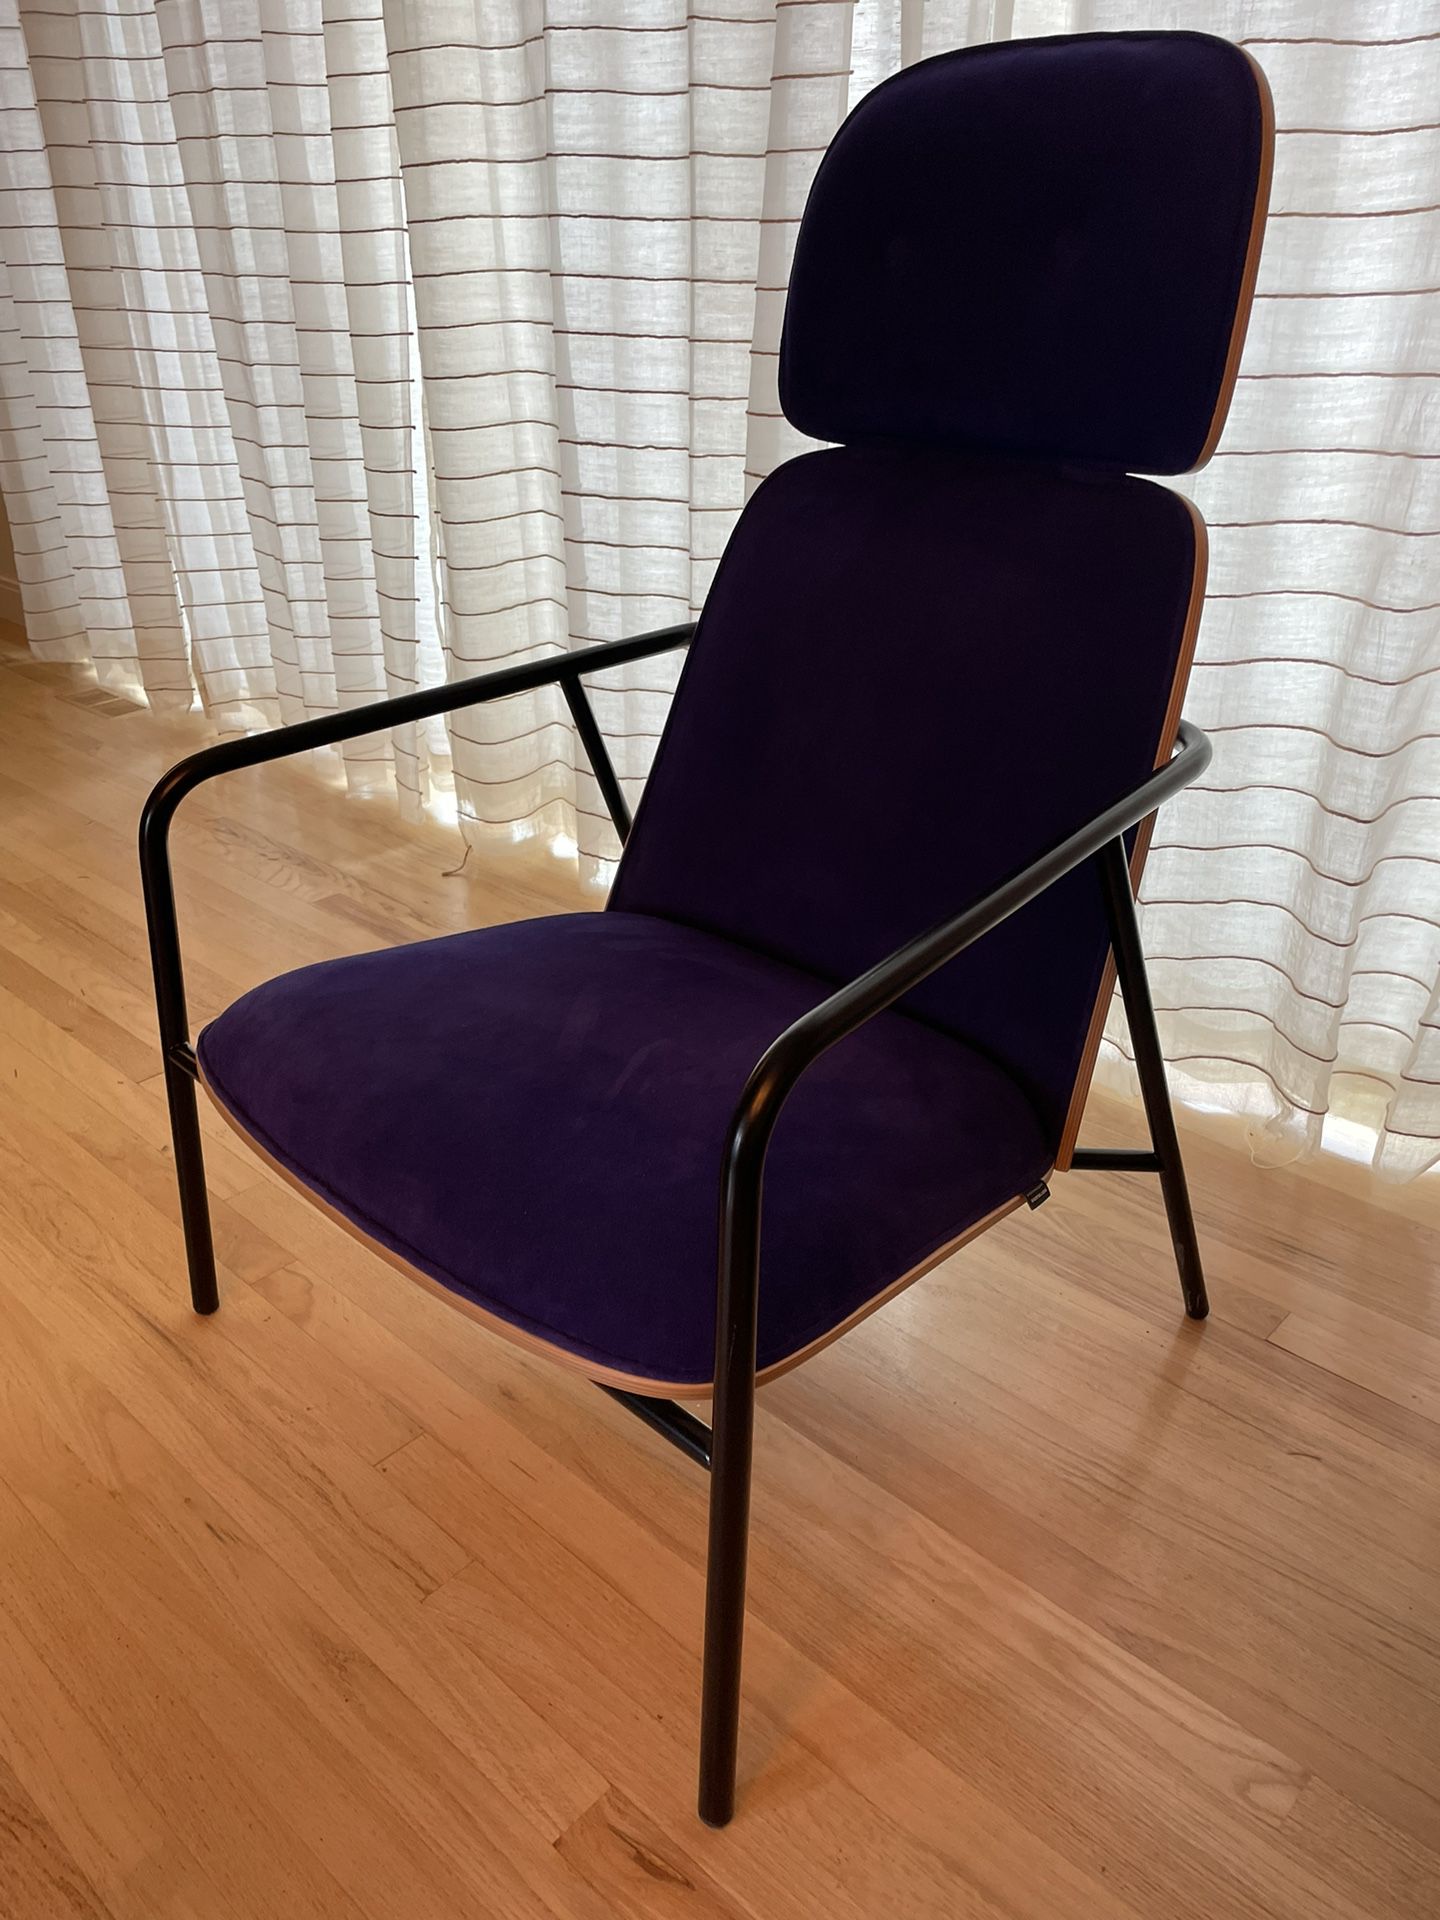 Norman Copenhagen Lounge Chair 